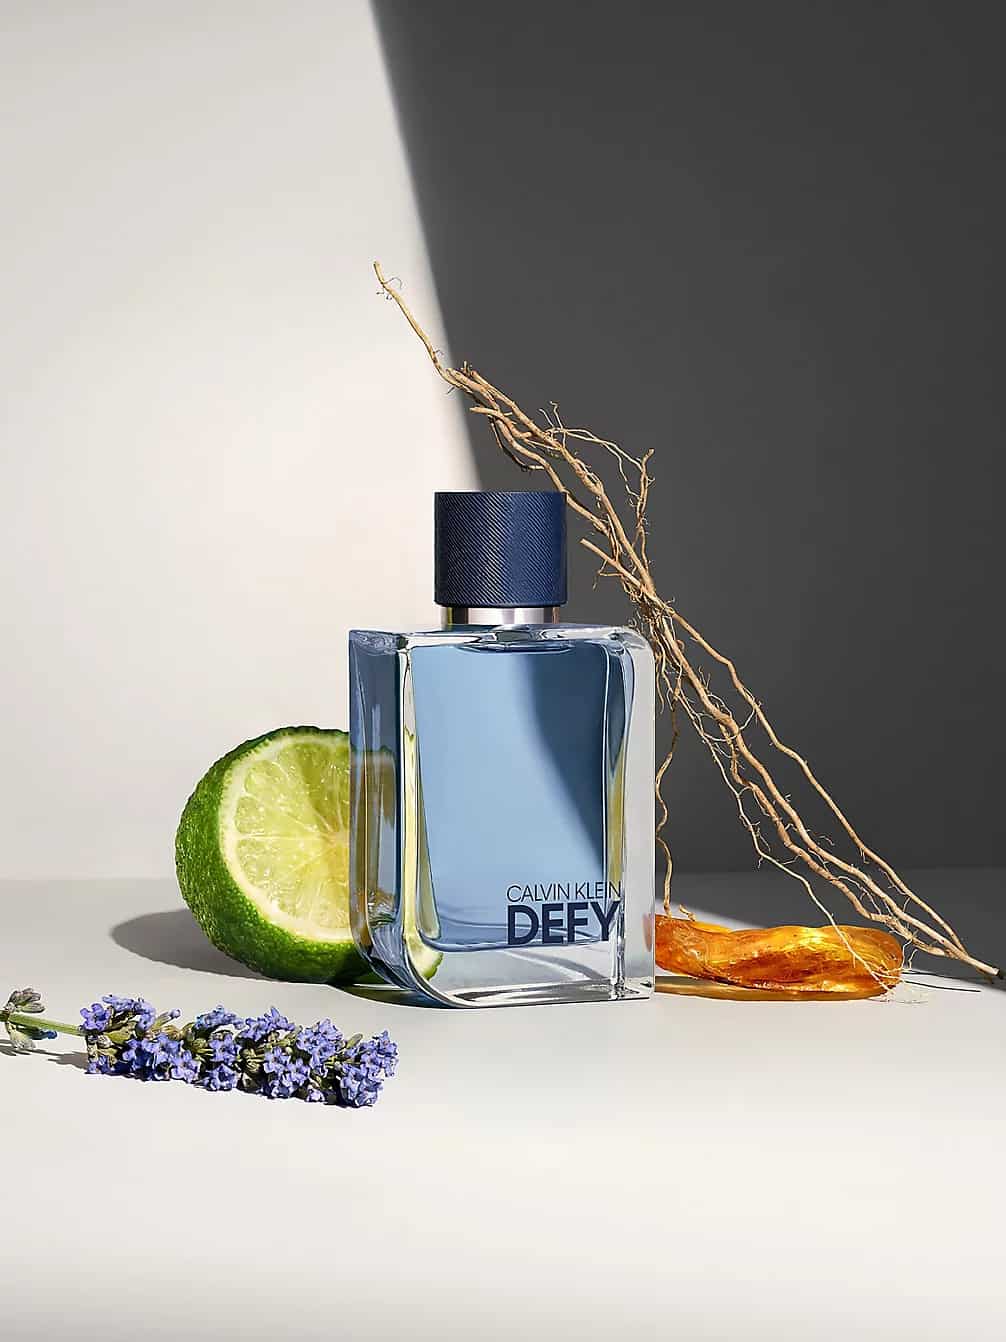 Calvin Klein Defy perfume